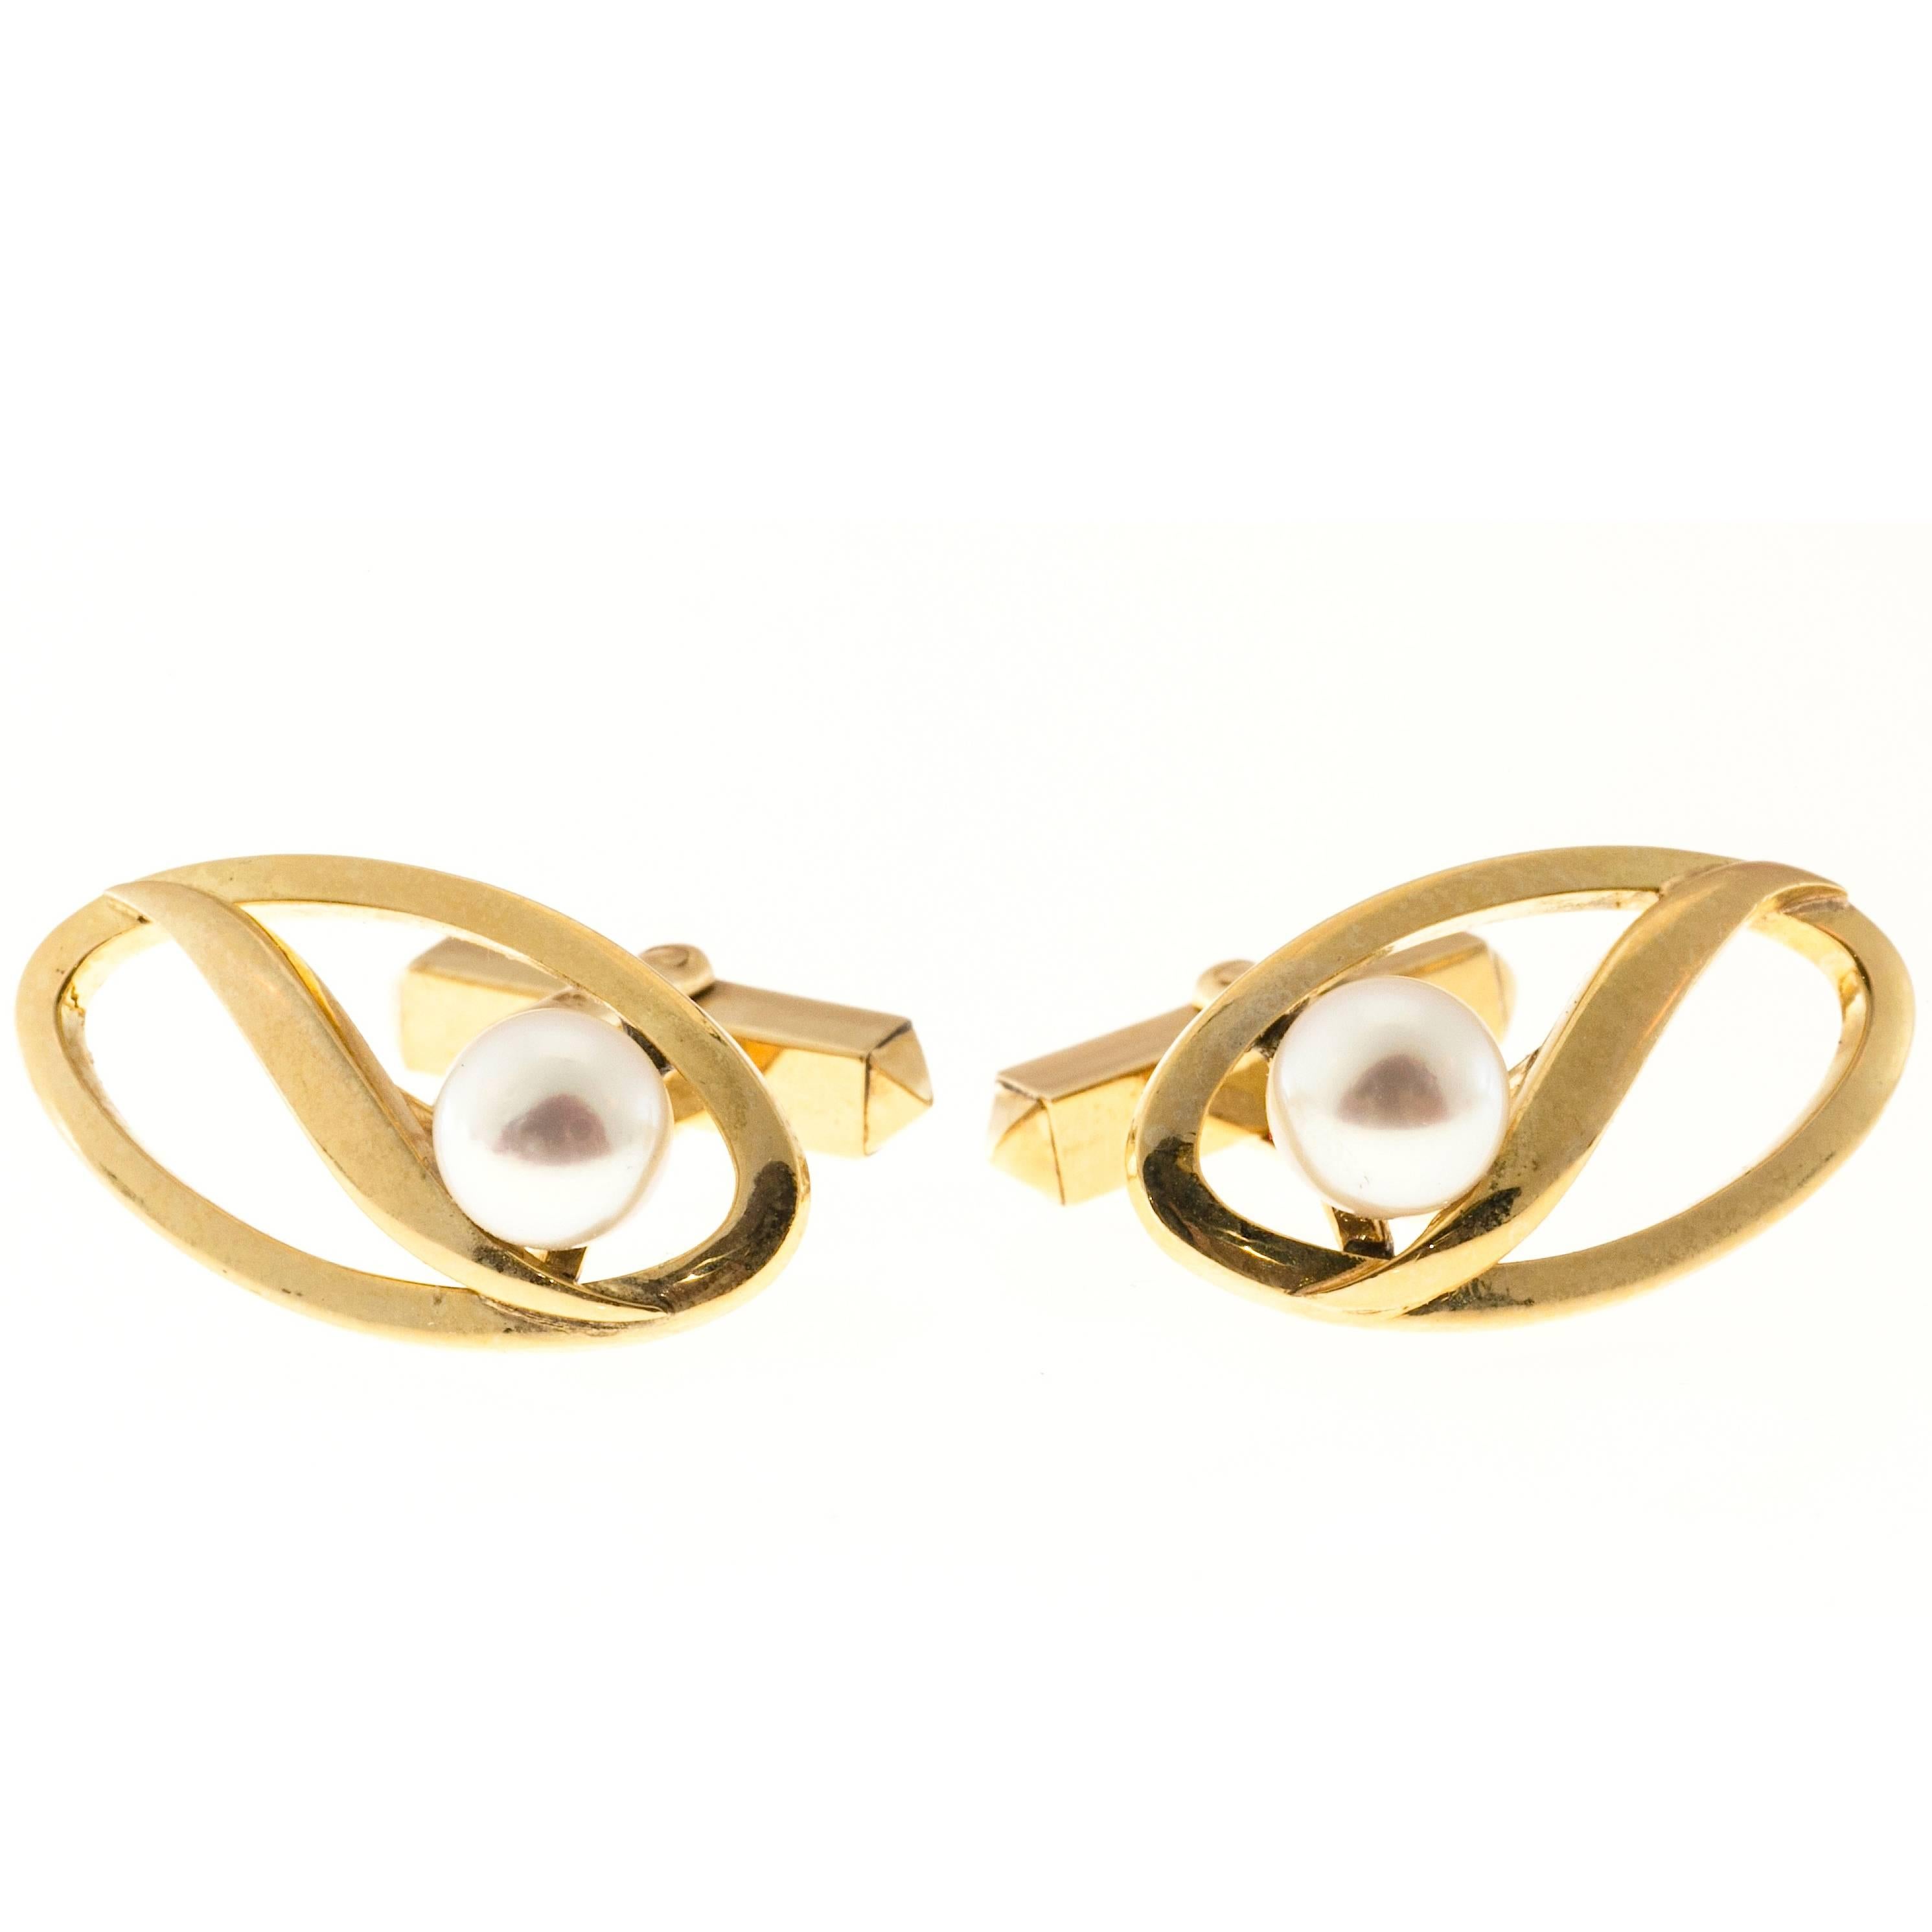  Mikimoto Cultured Pearl Gold Cufflinks